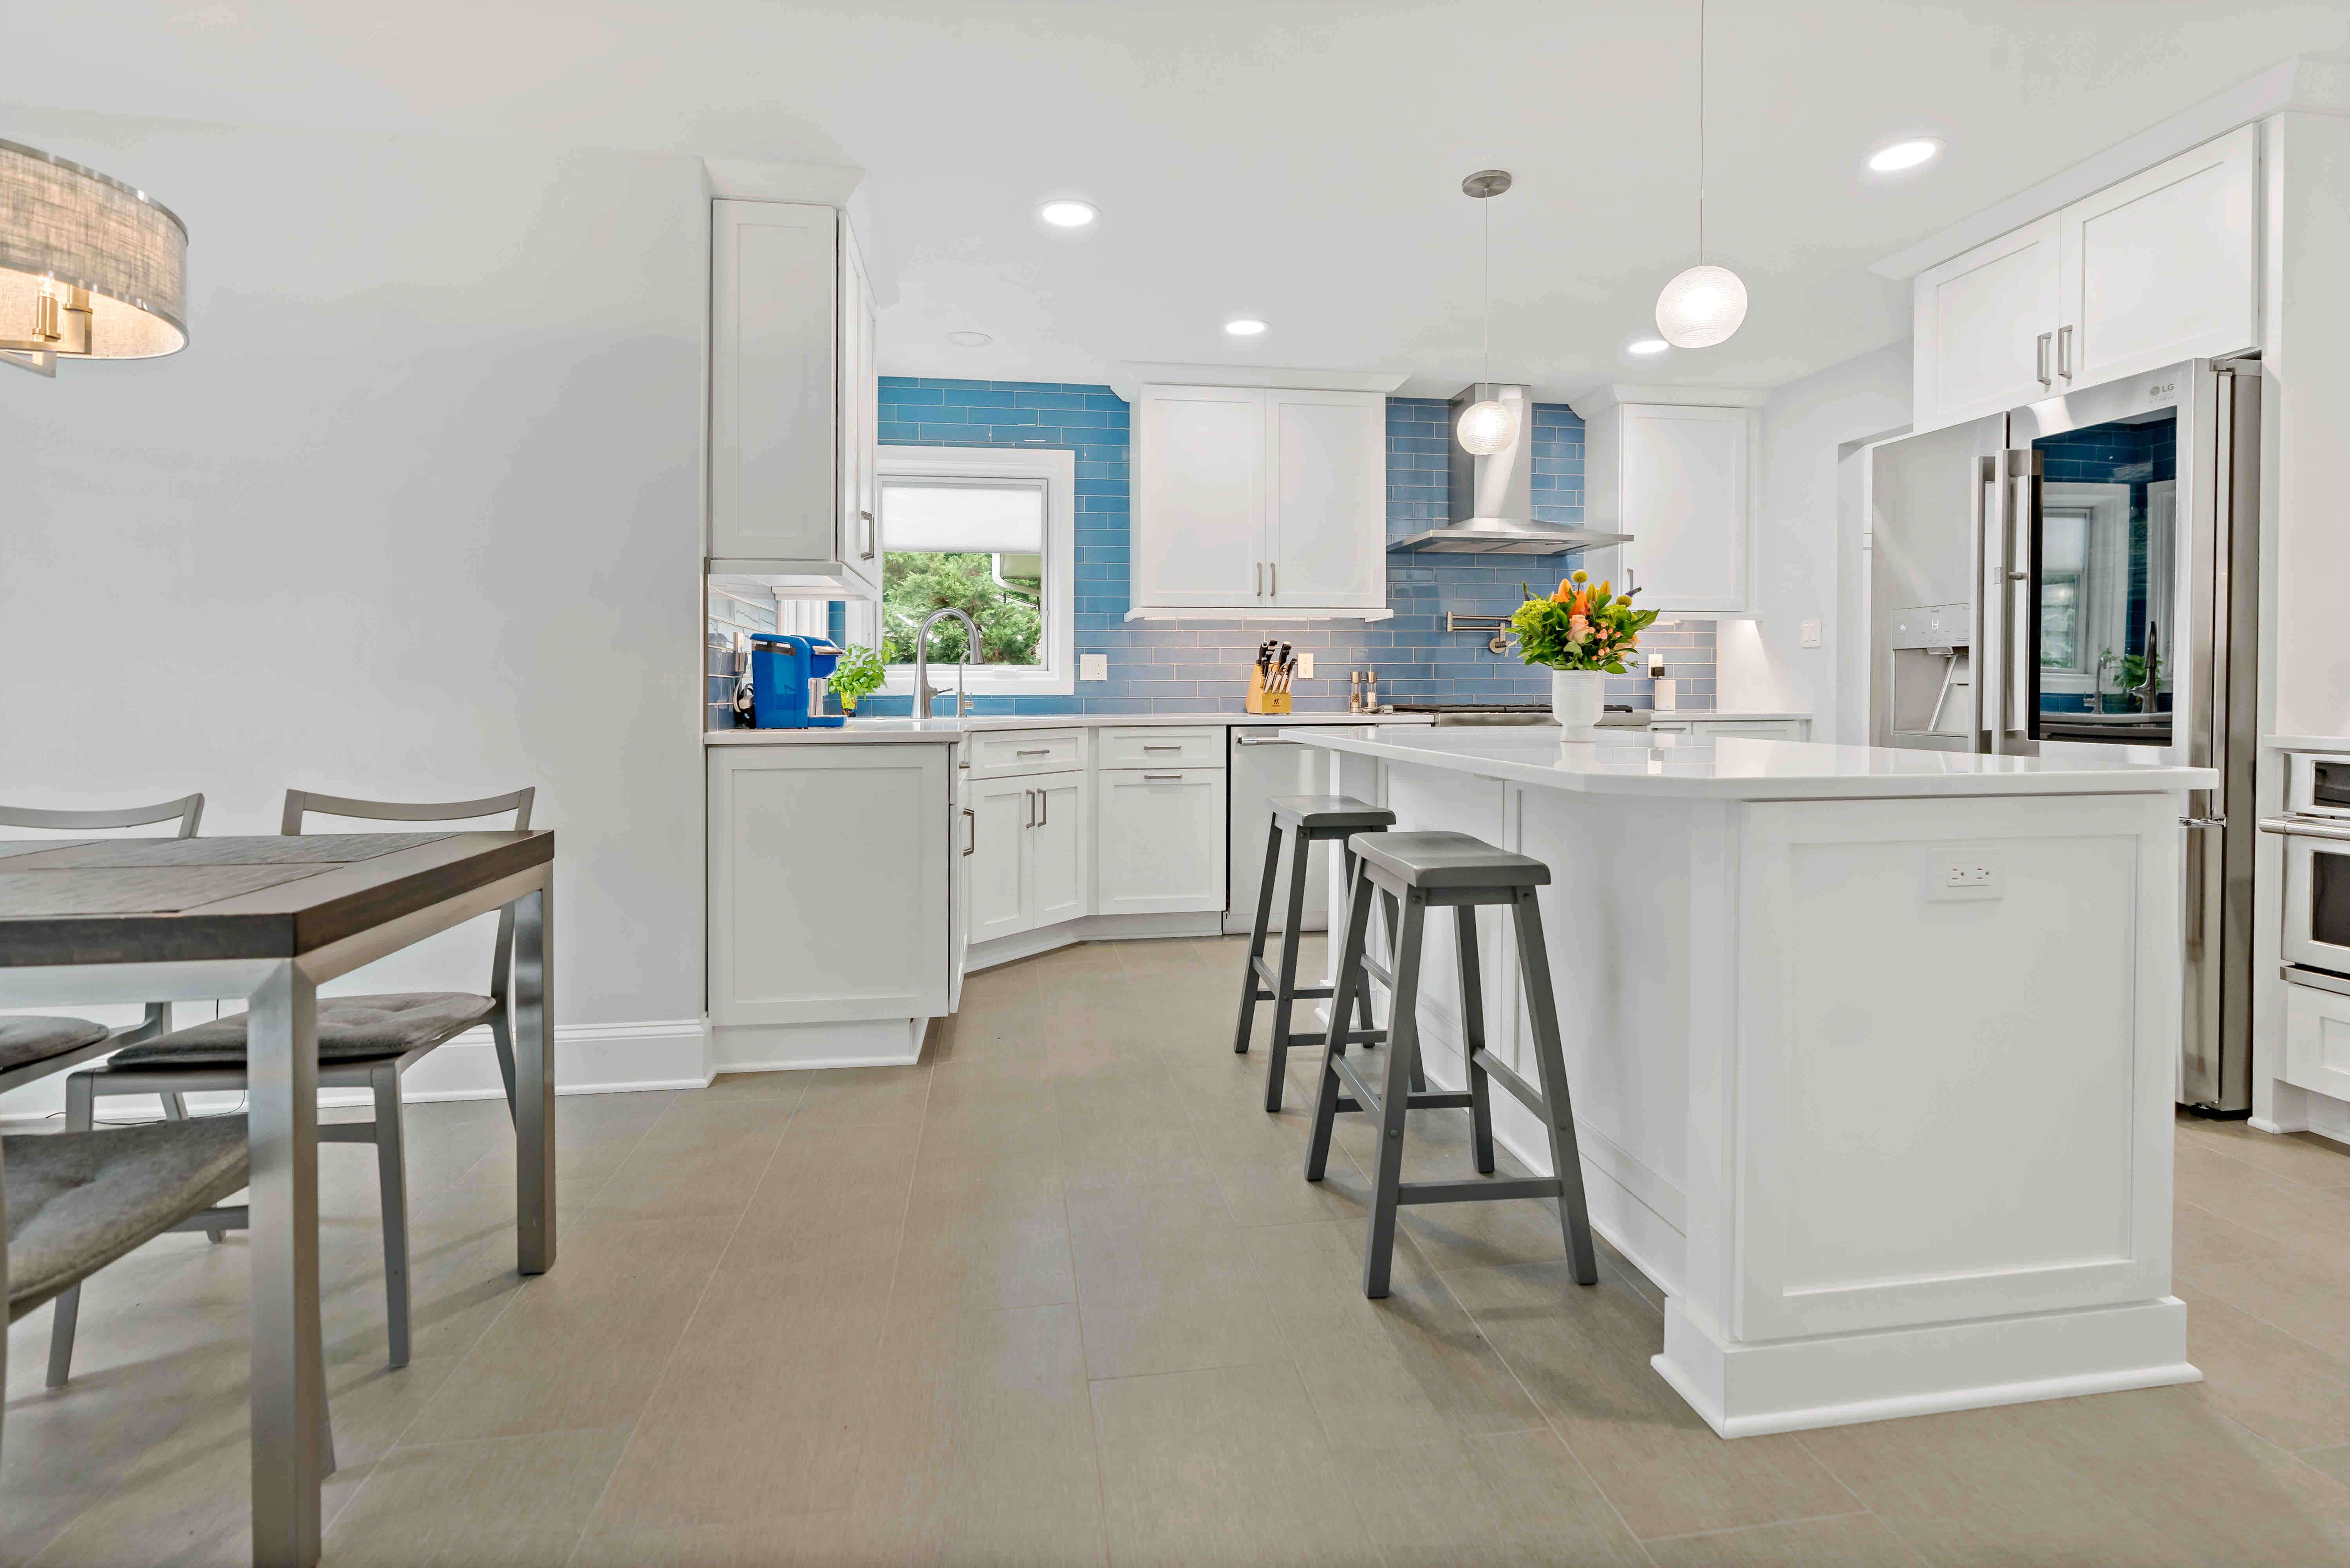 Beige tile flooring in spacious white kitchen